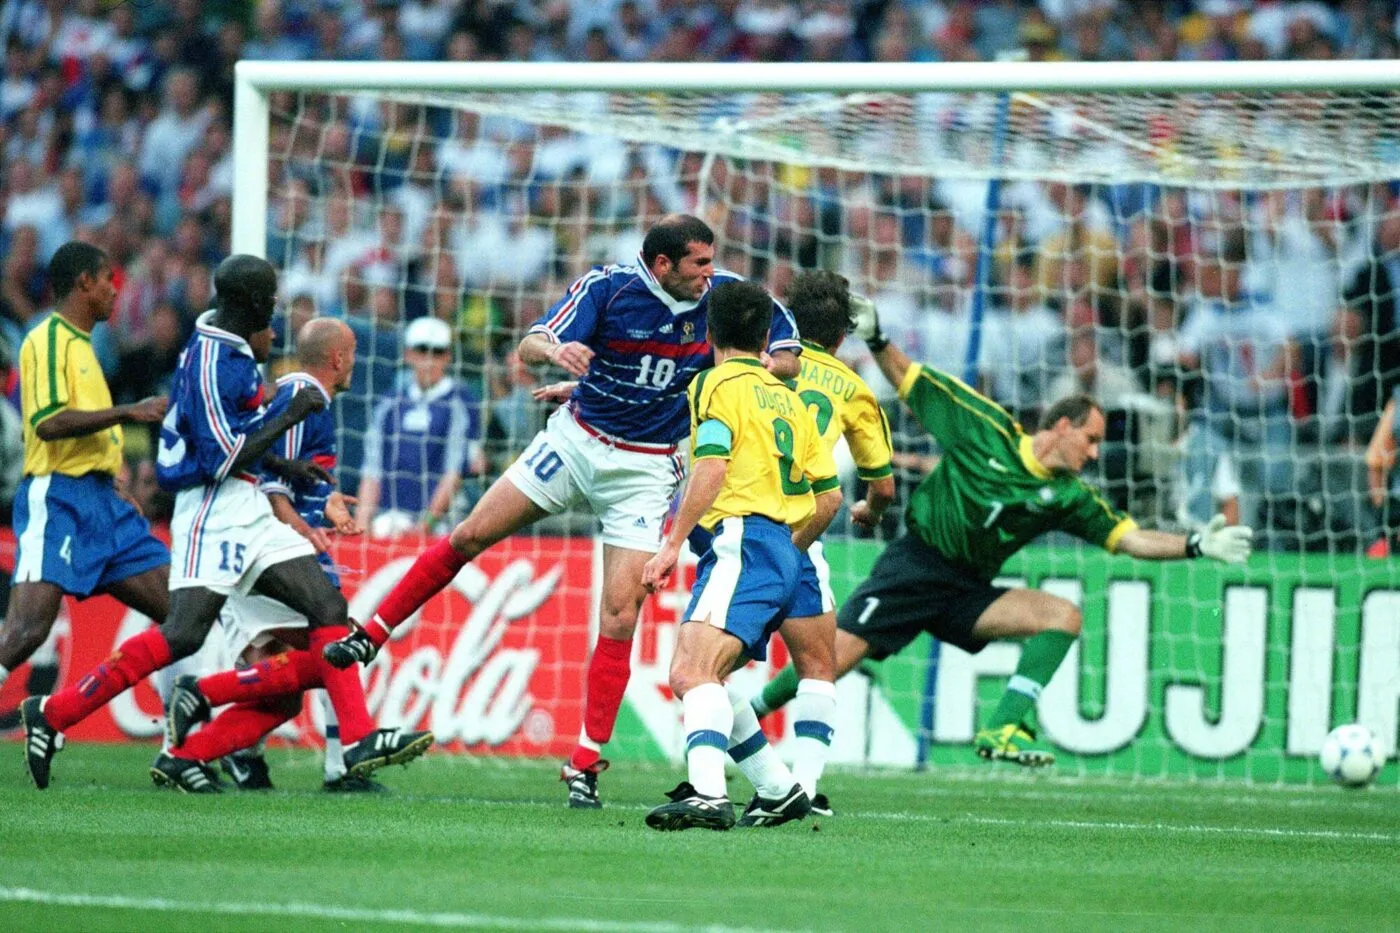 Zinedine ZIDANE - France / Bresil - 12.07.1998 - Coupe du Monde 1998 - Stade de France